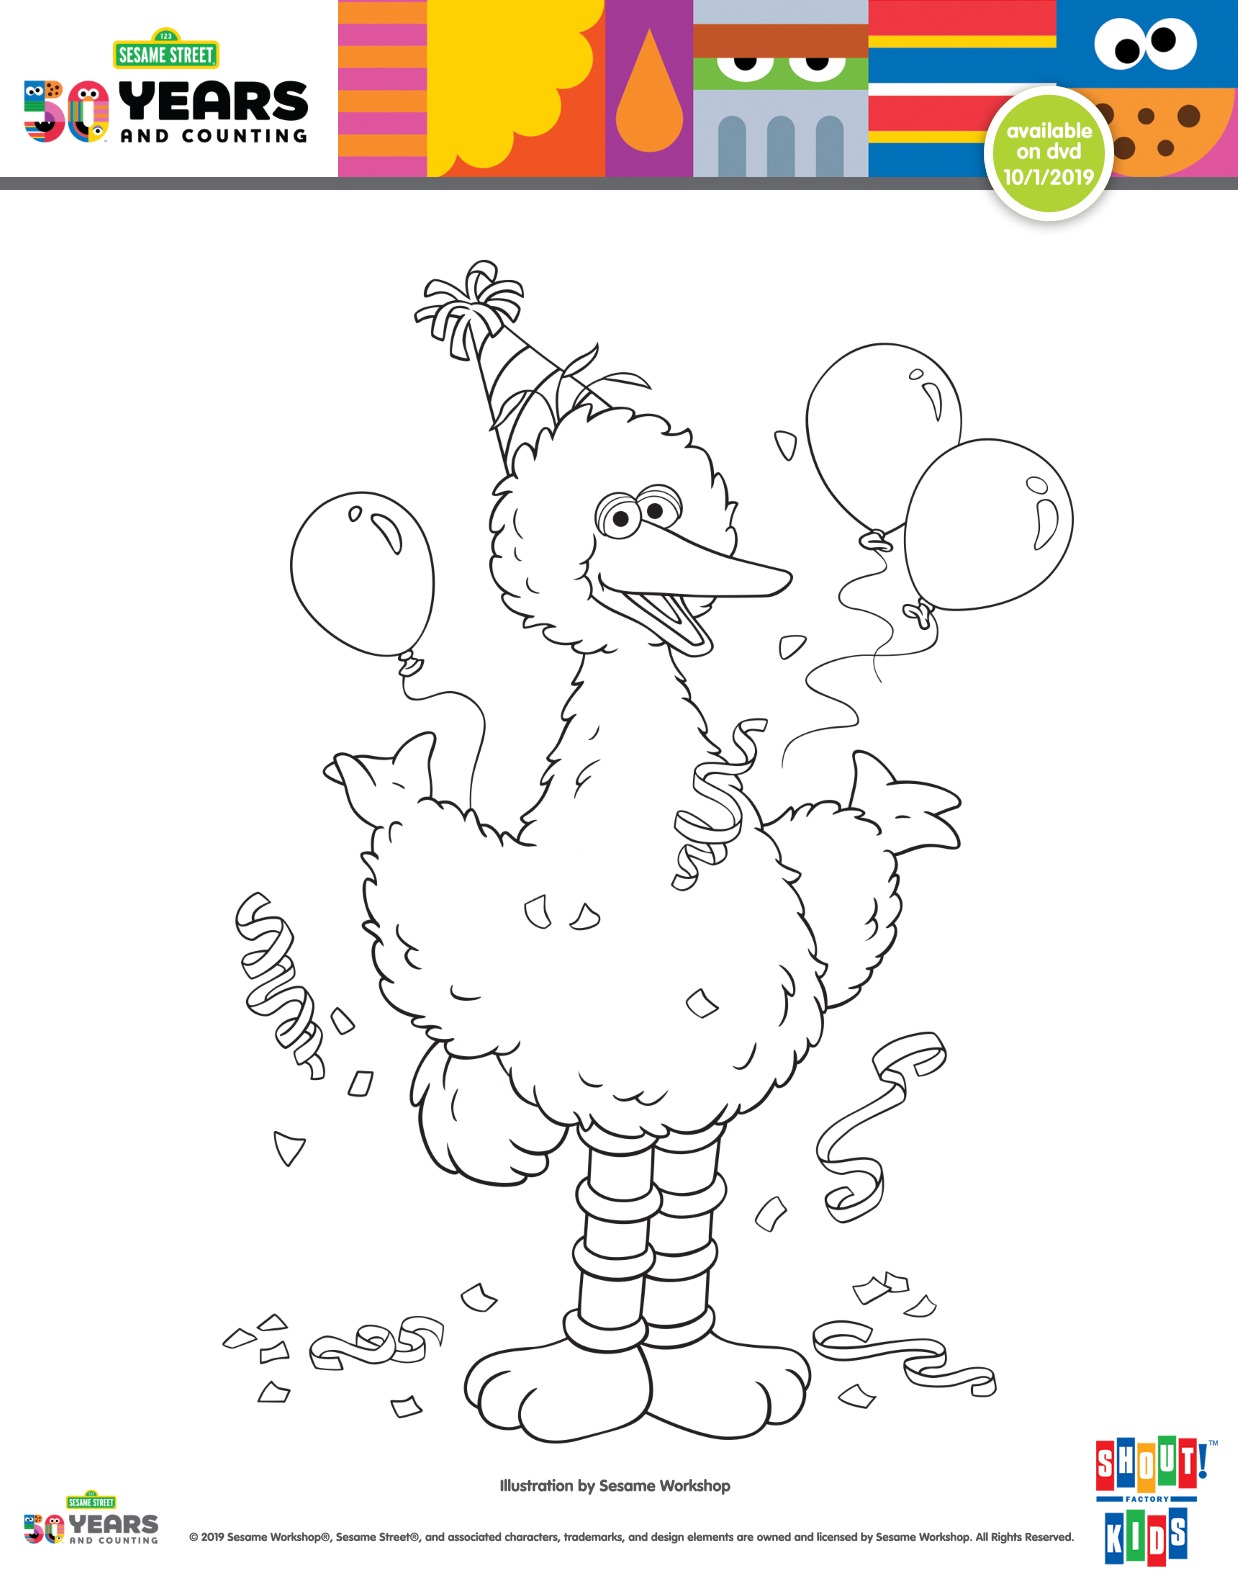 Free Printable Big Bird Birthday Coloring Page from Sesame Street #SesameStreet #BigBird #FreePrintable #ColoringPage #BirthdayColoringPage 